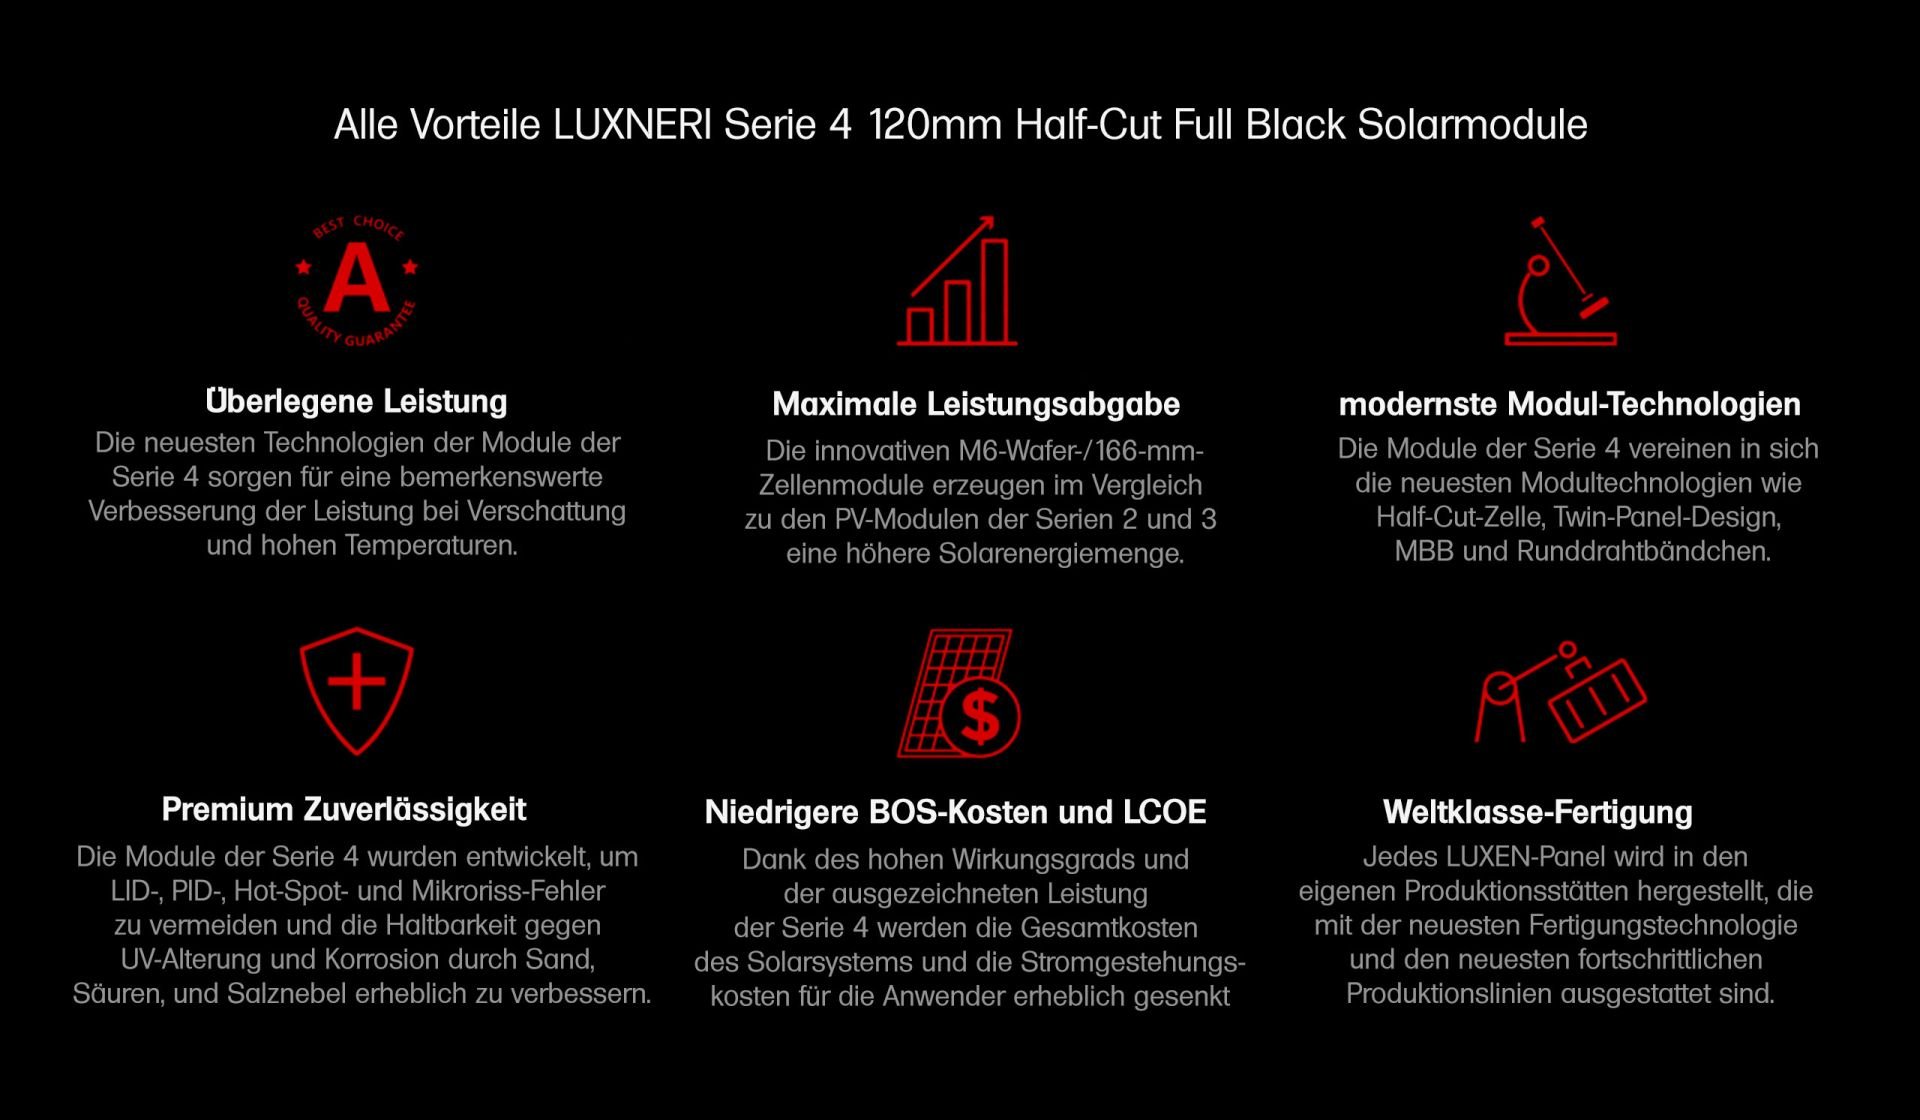 Luxen Solar 370W Full Black Solar Module LUXNERI SERIES 4